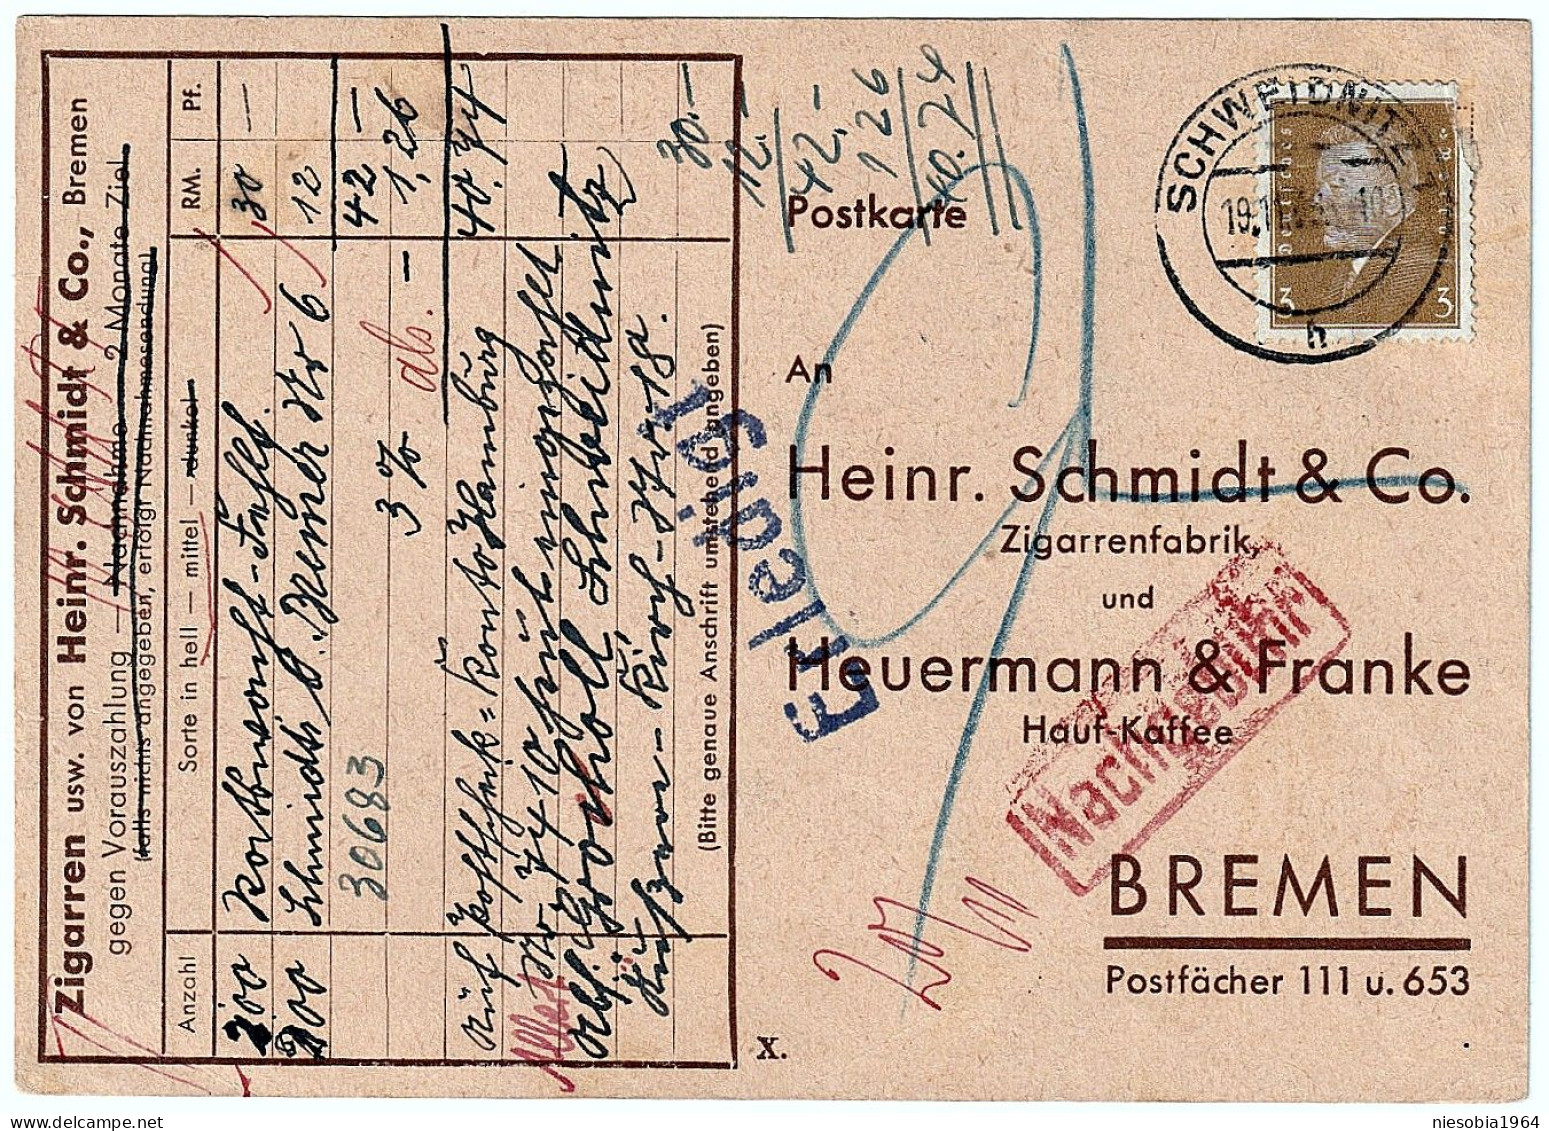 Company Postcard Heinr. Schmidt & Co.Cigar Factory And Heurenmann & Franke Hauf-Kaffe BREMEN Seal SCHWEIDNITZ 19/11/1938 - Briefkaarten